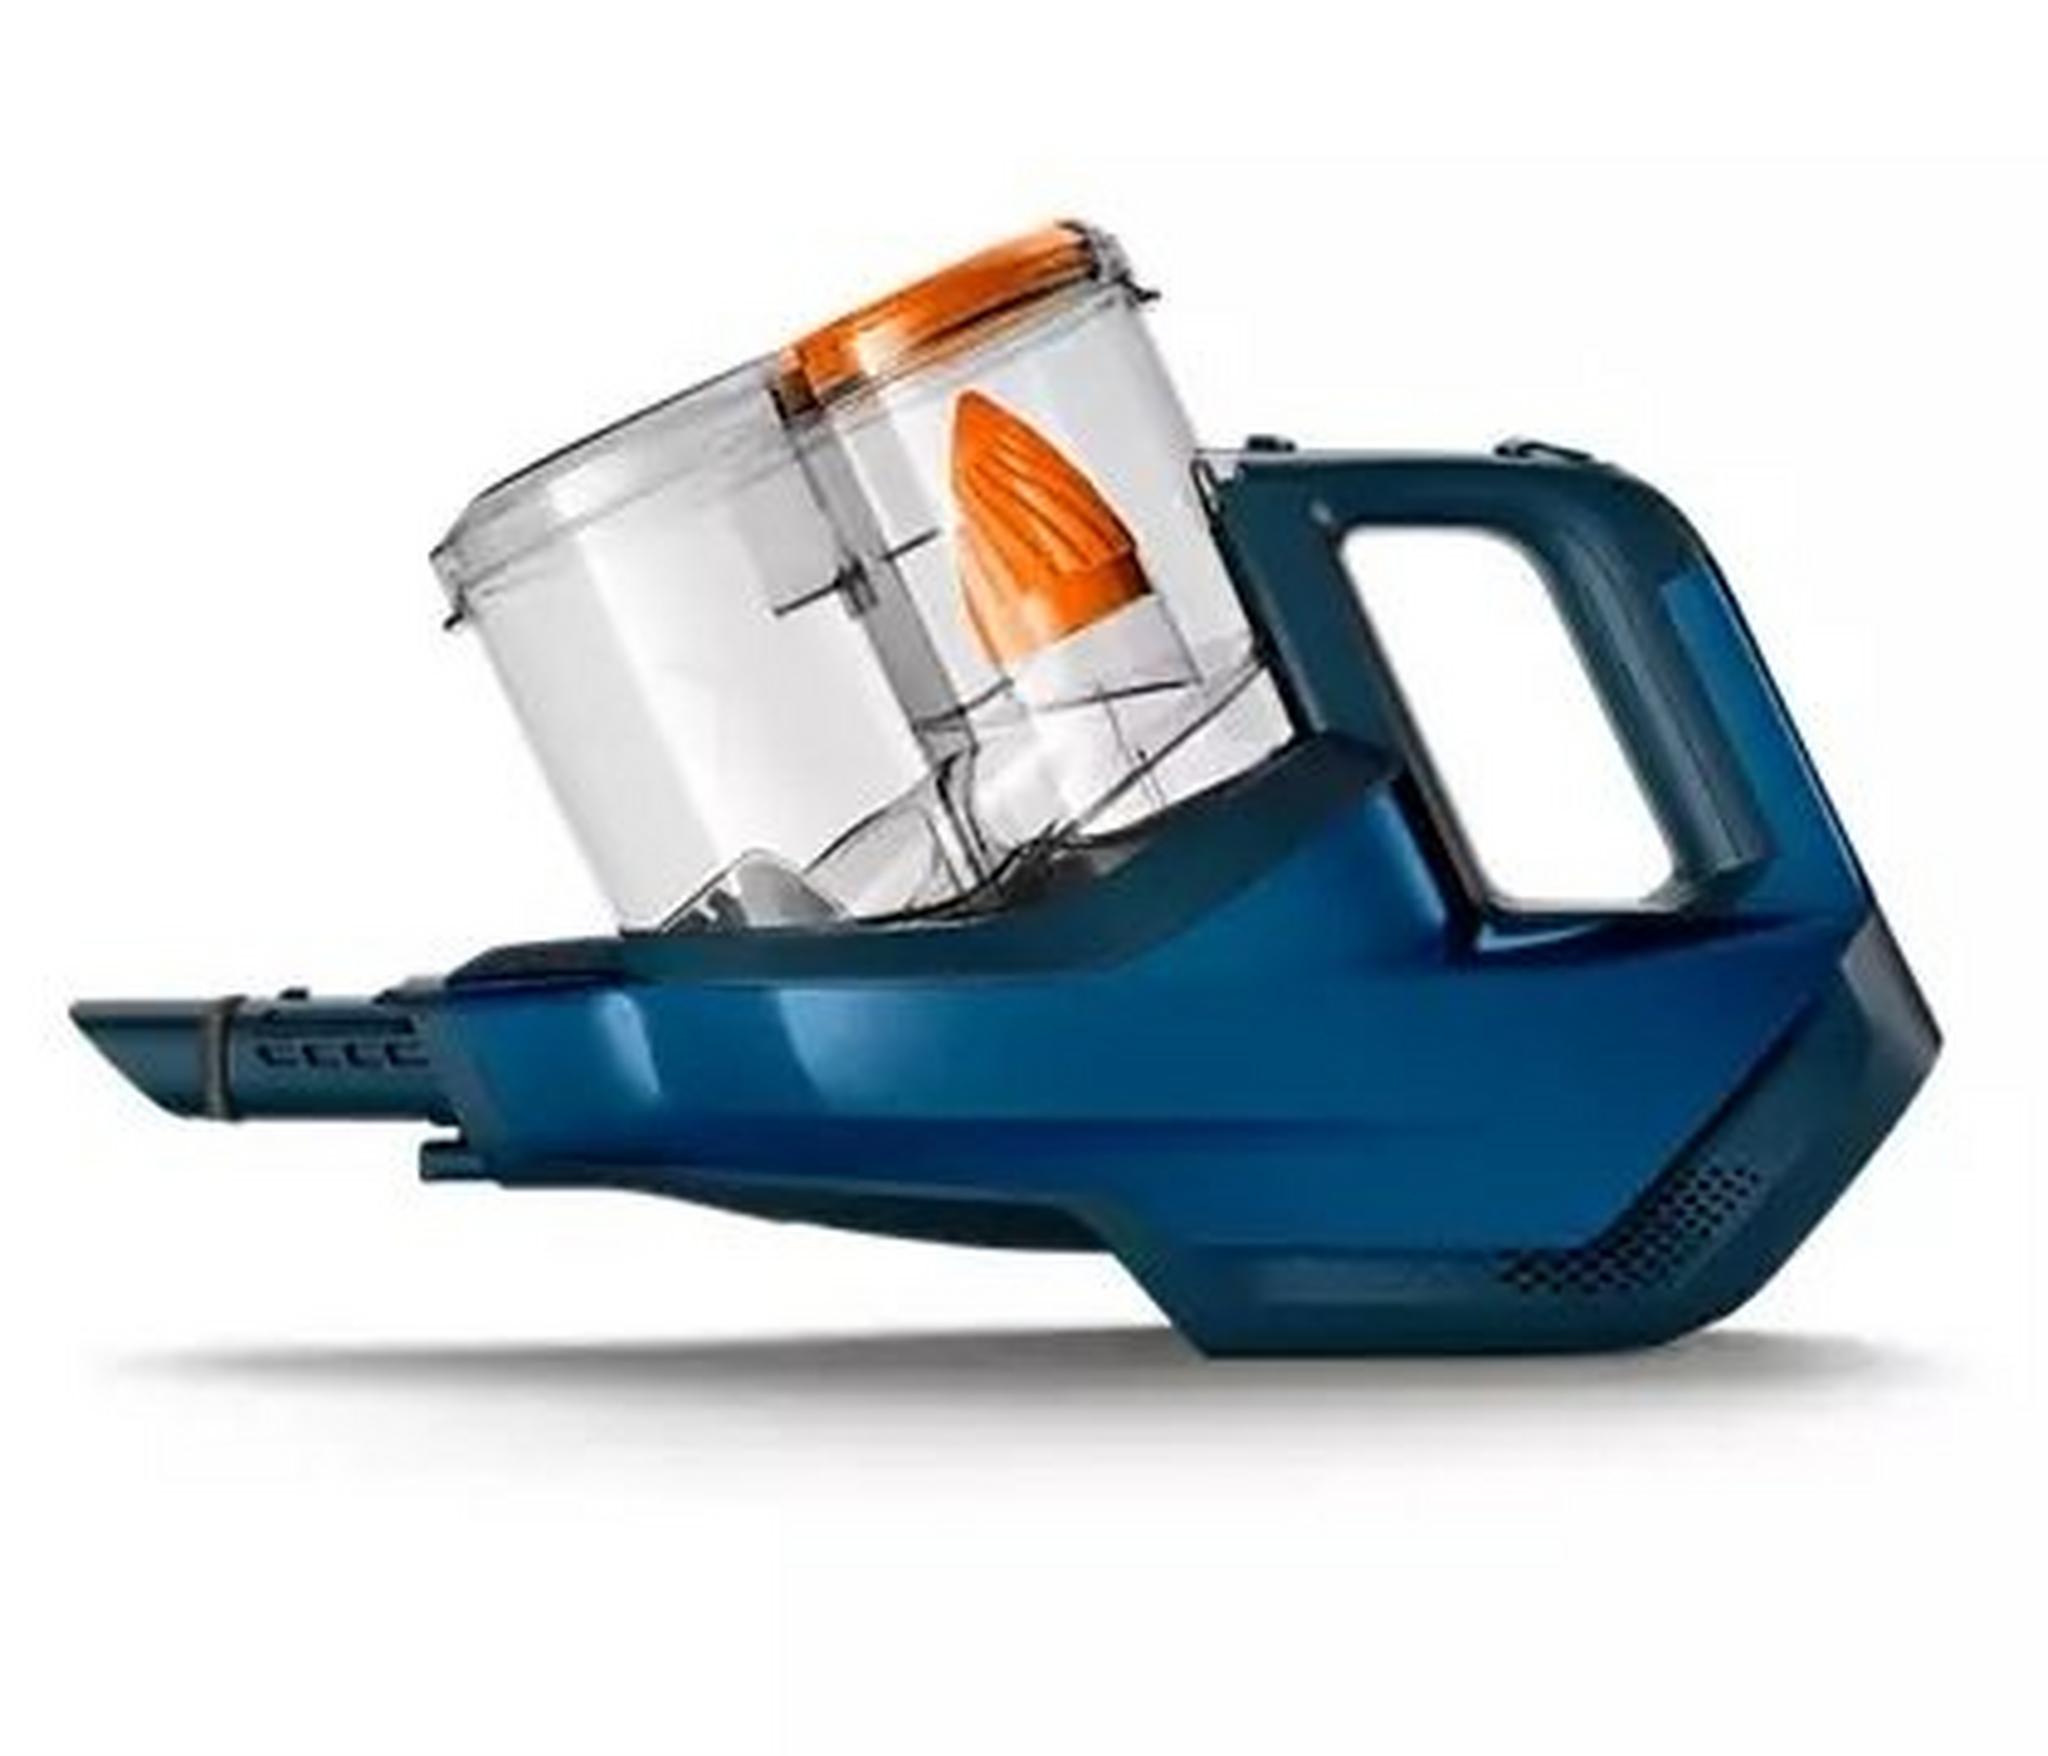 Philips SpeedPro Cordless Stick Vacuum Cleaner, 0.4 Liters, FC6724/61 - Blue